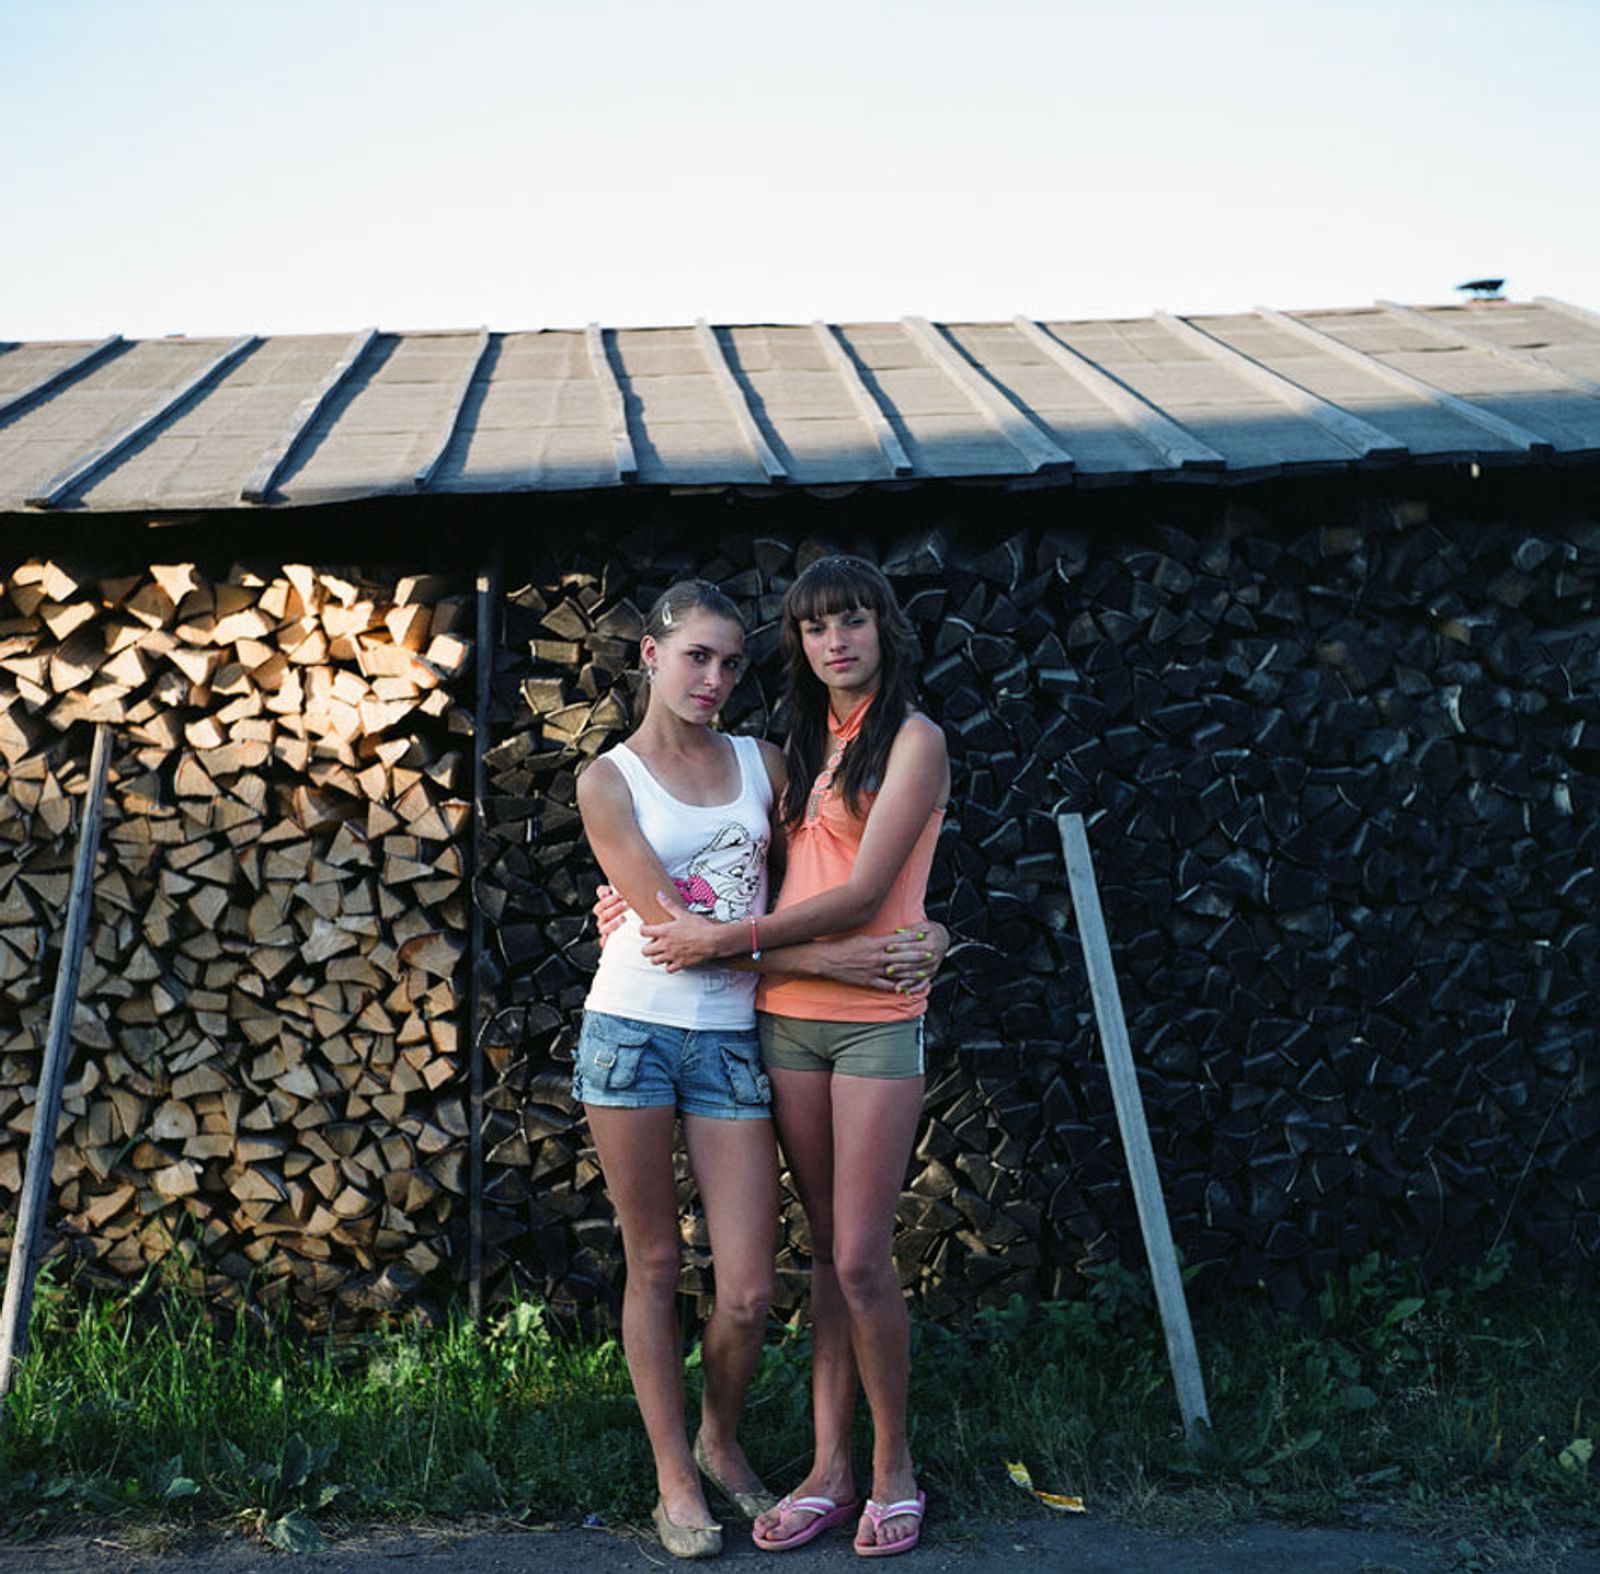 © Olya Ivanova - Image from the Kich-Gorodok photography project